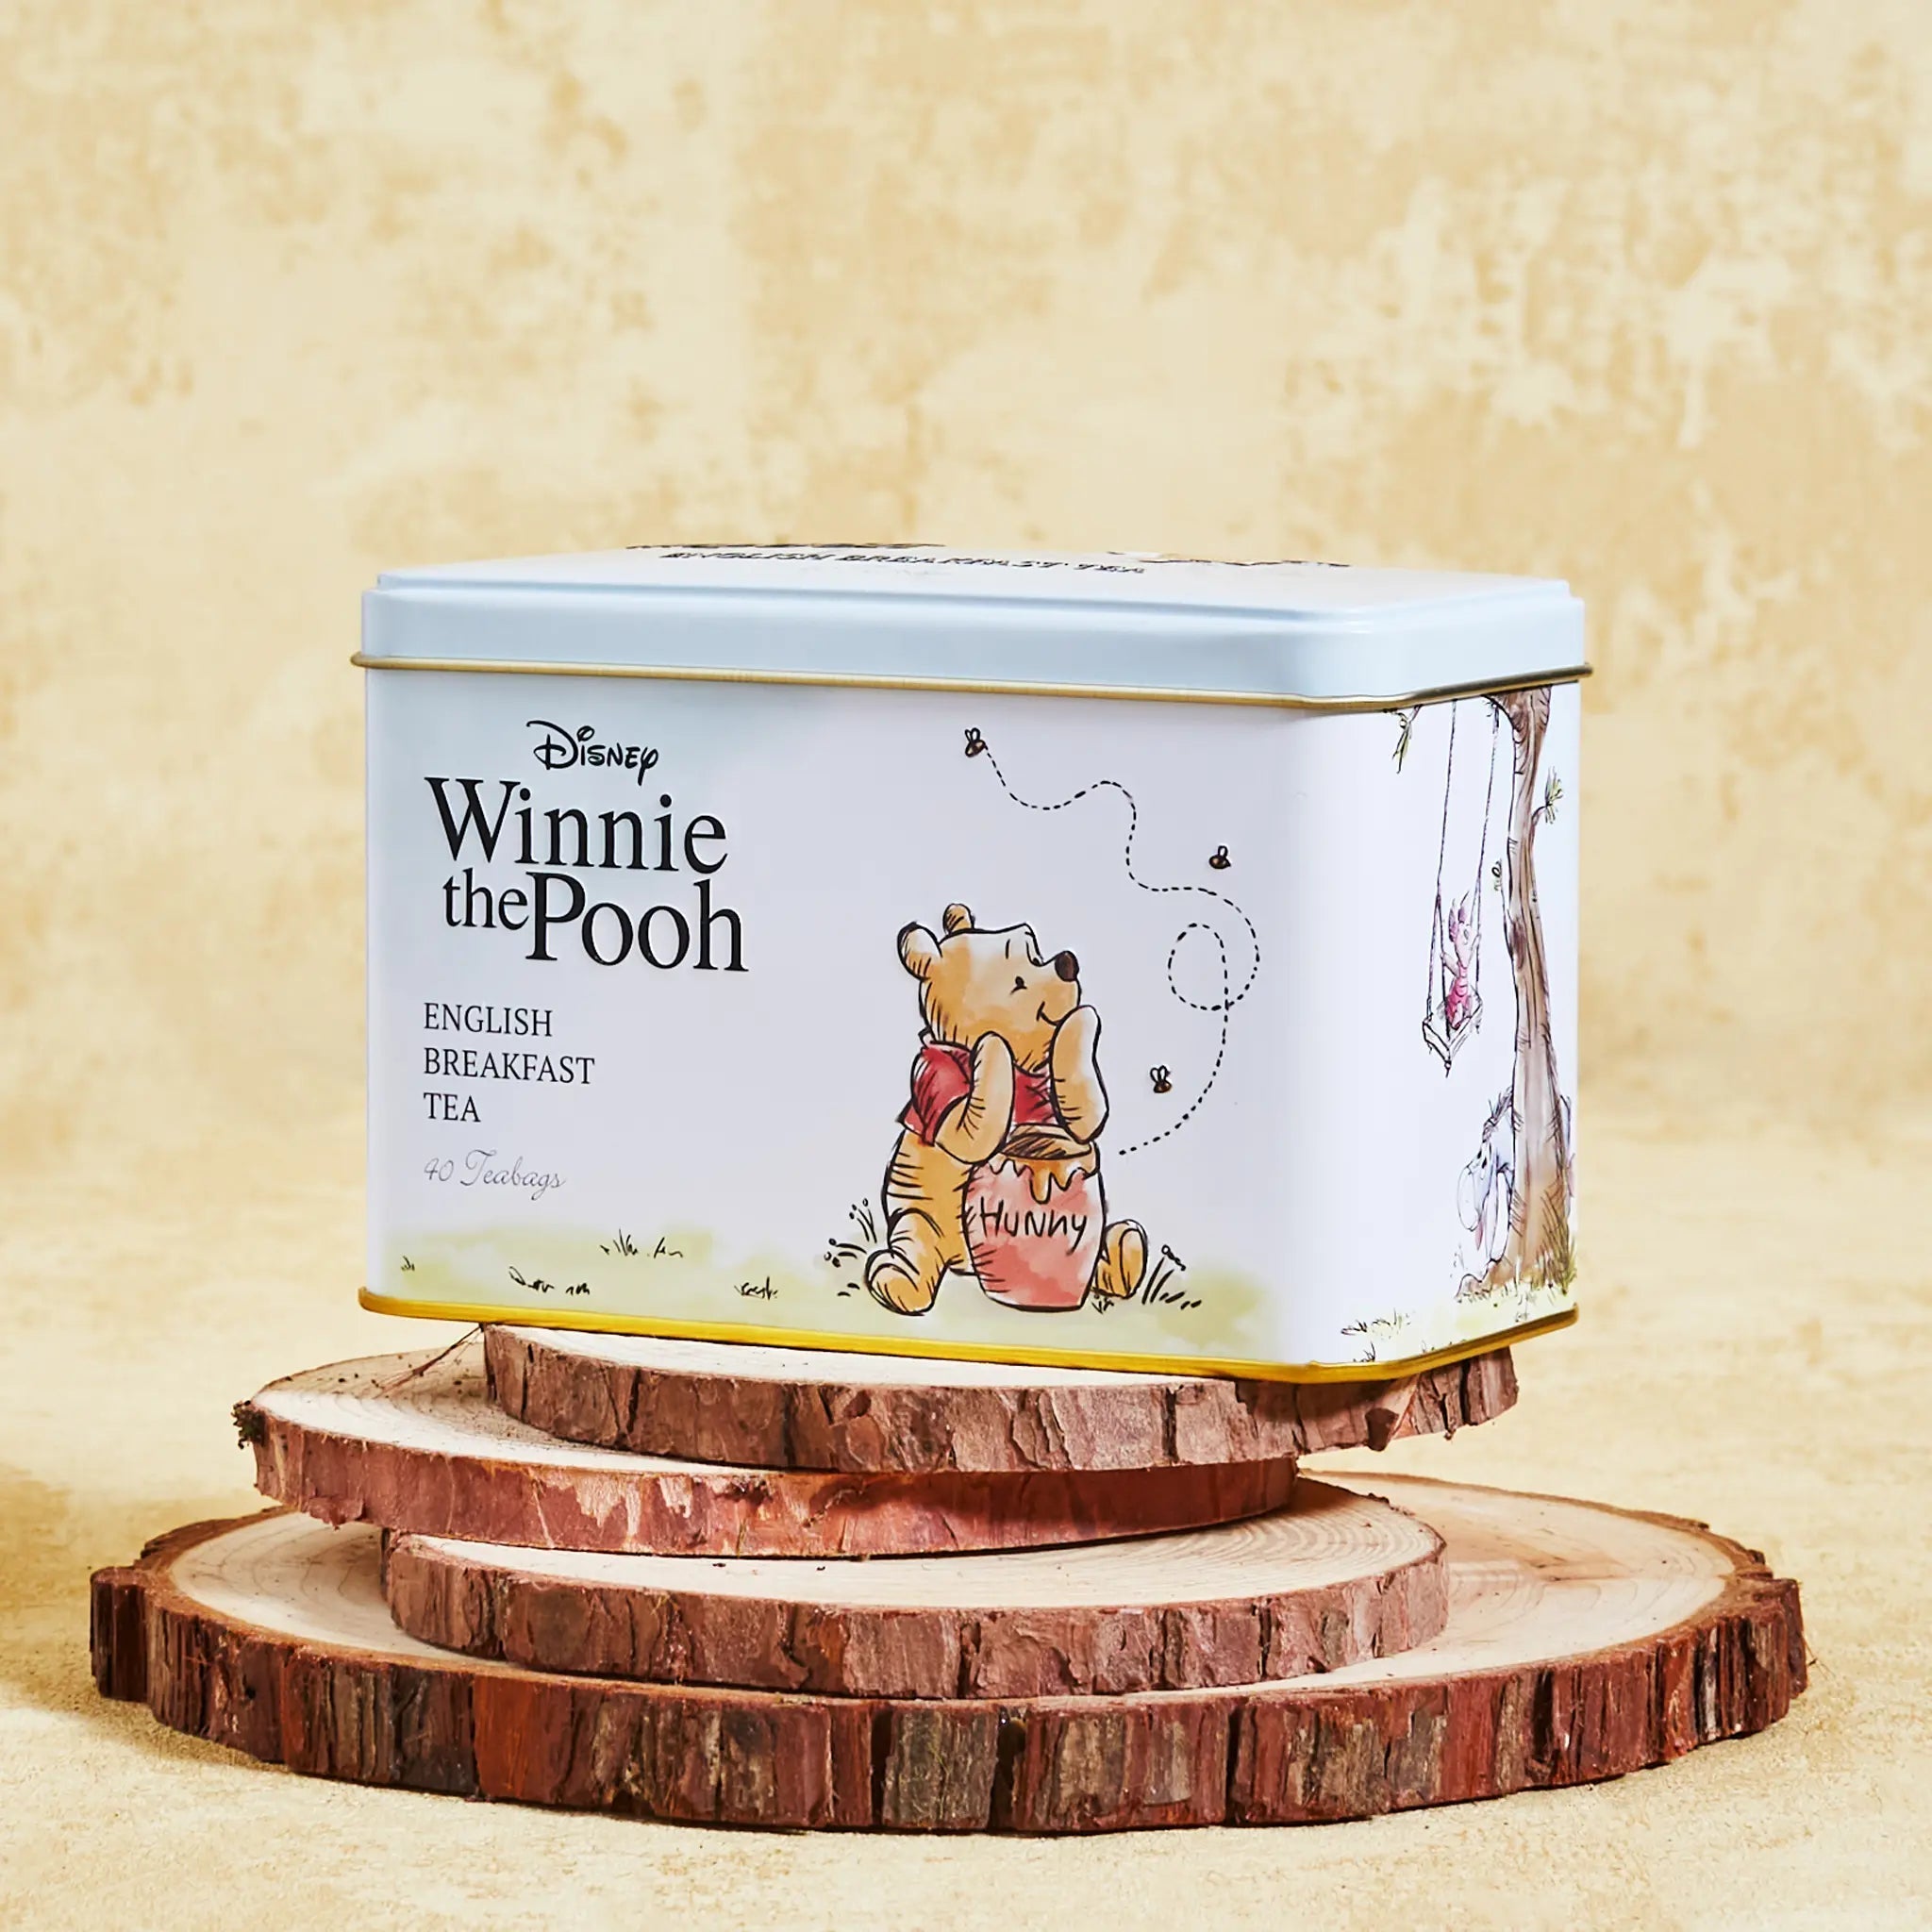 Disney Winnie the Pooh Tea Tin with 40 English Breakfast Teabags